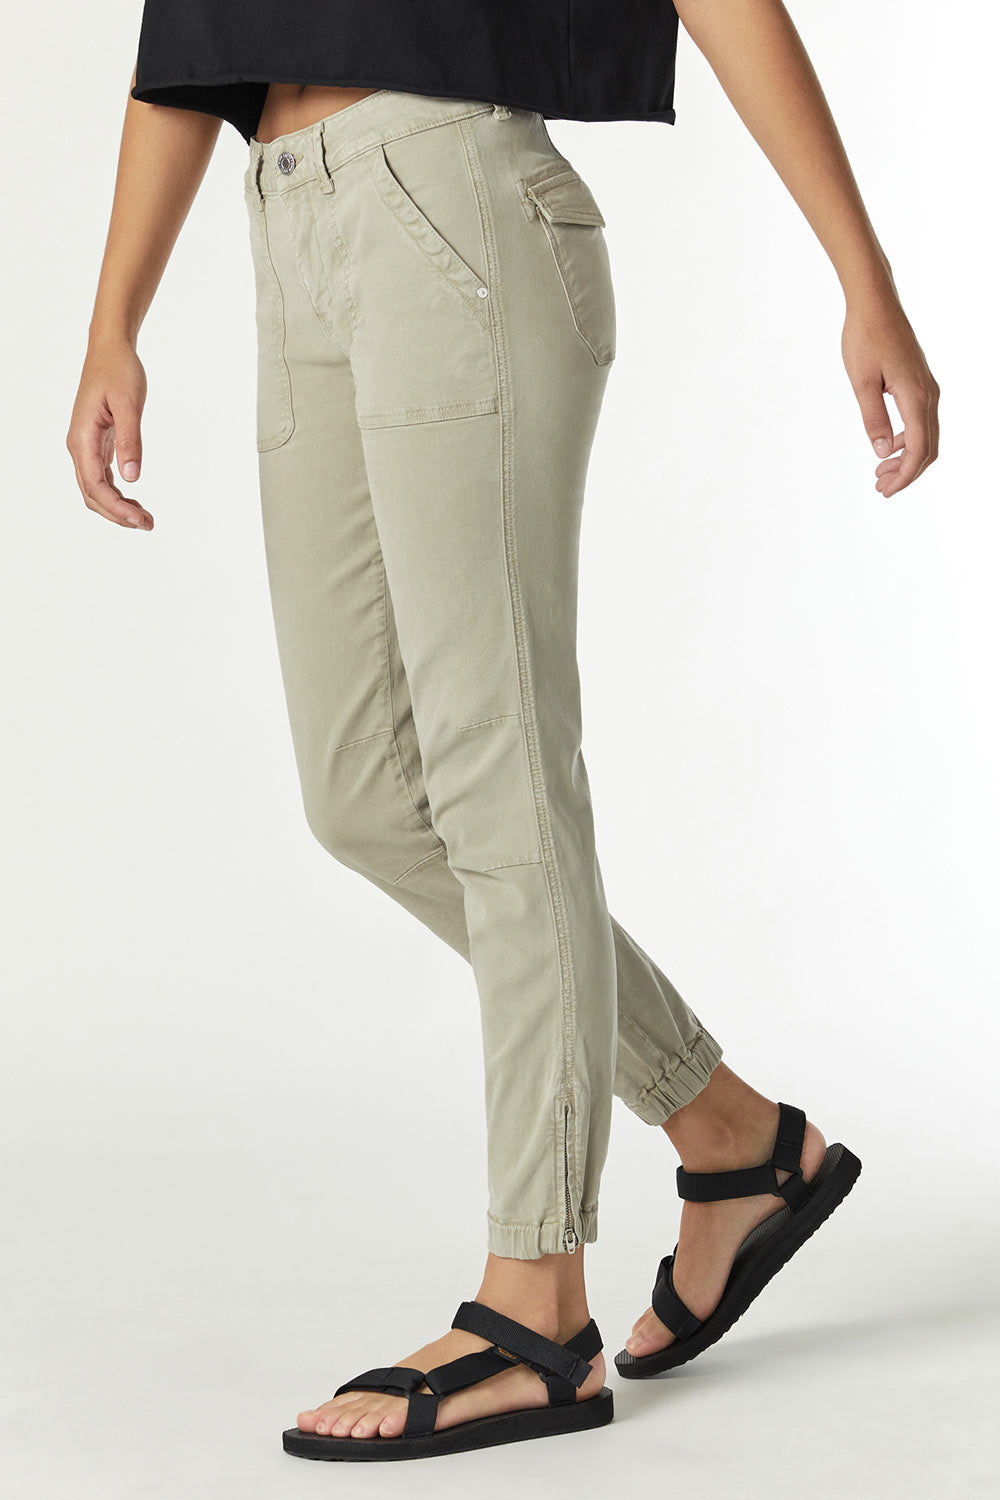 Side view of Mavi Jeans (M100774-83341) Women's Ivy Slim Cargo Pants Abbey Stone Sateen TwillIvy Slim Cargo Pants Abbey Stone Sateen Twill with Pockets